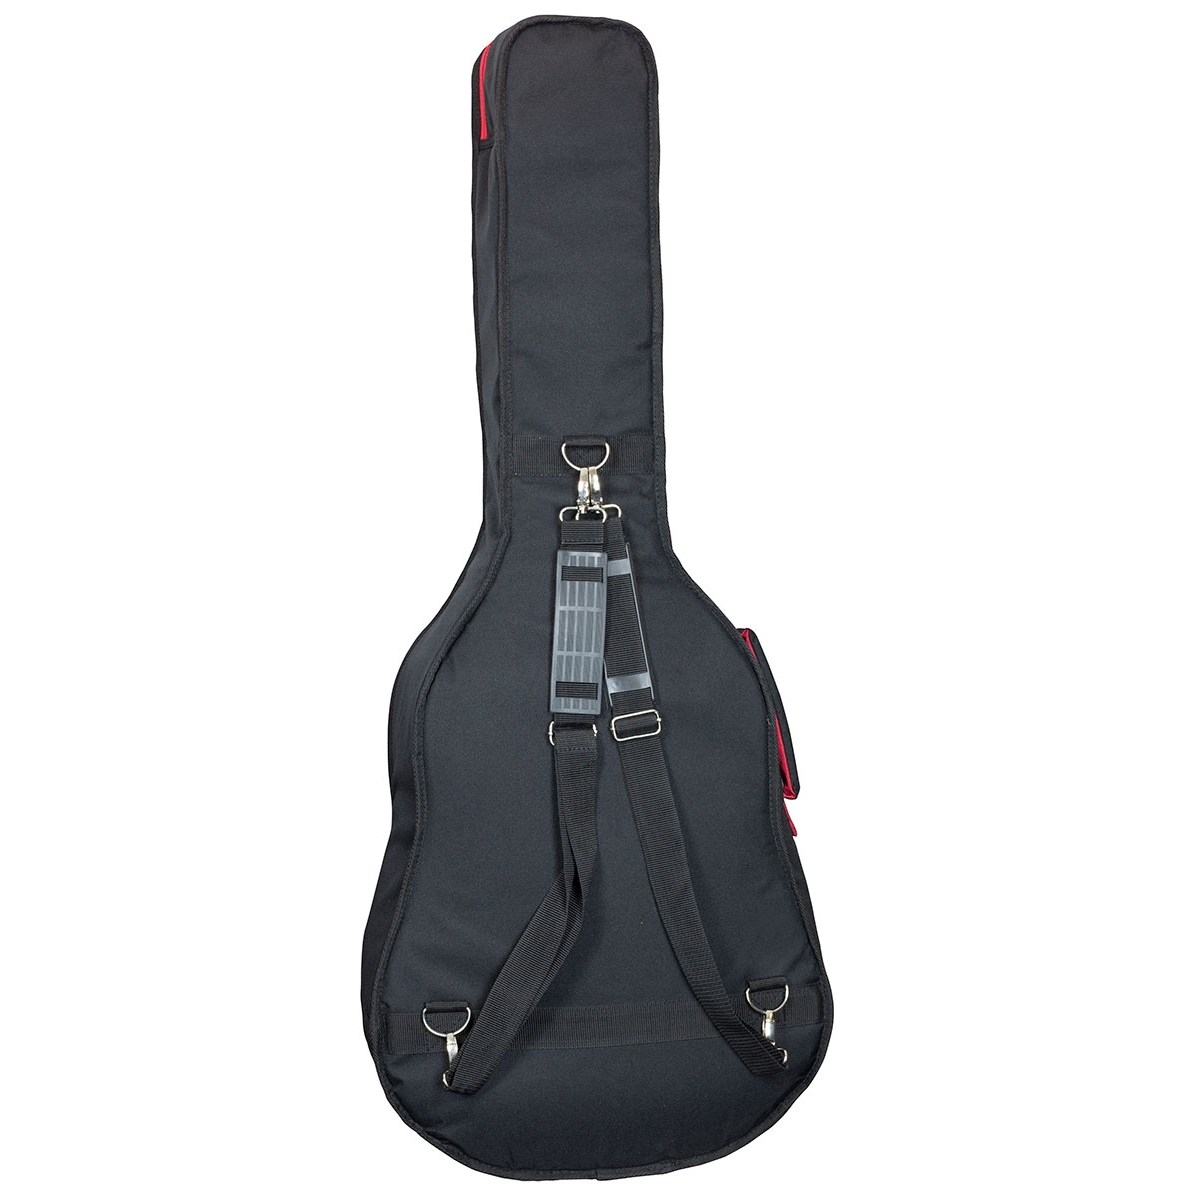 TGI Transit Series Gig Bag for Acoustic Guitar - Dreadnought